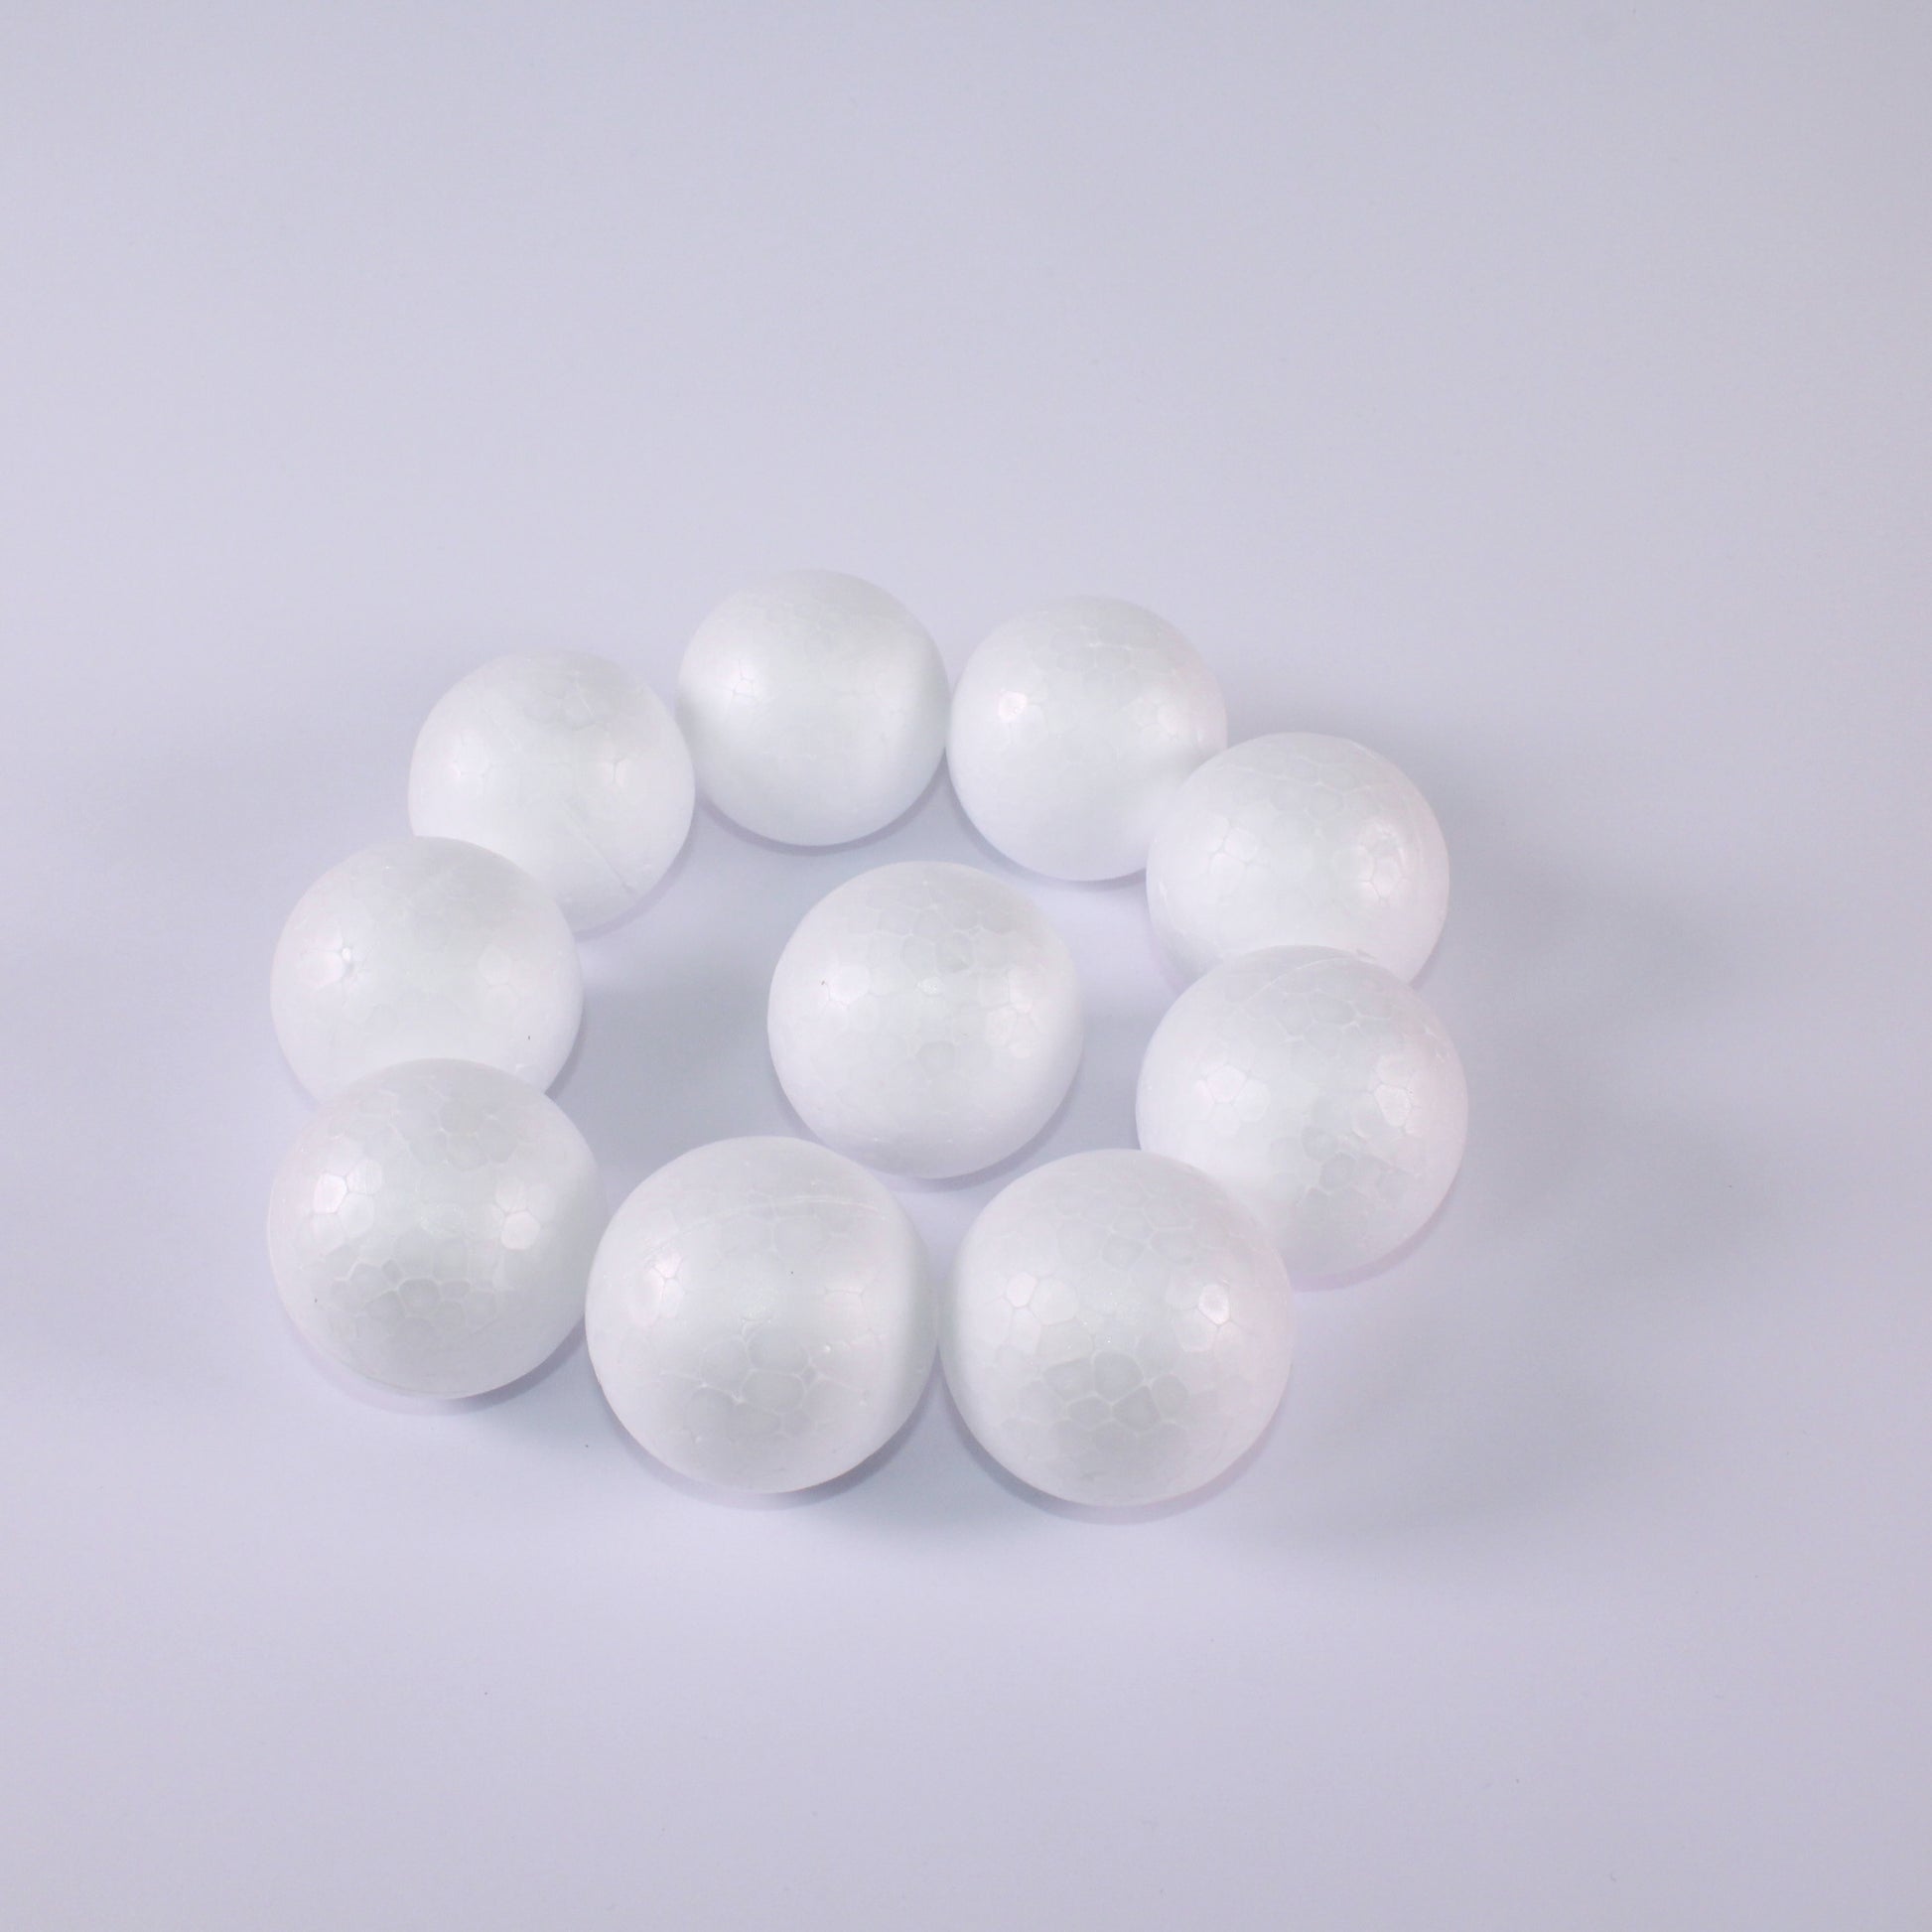 40mm polystyrene balls